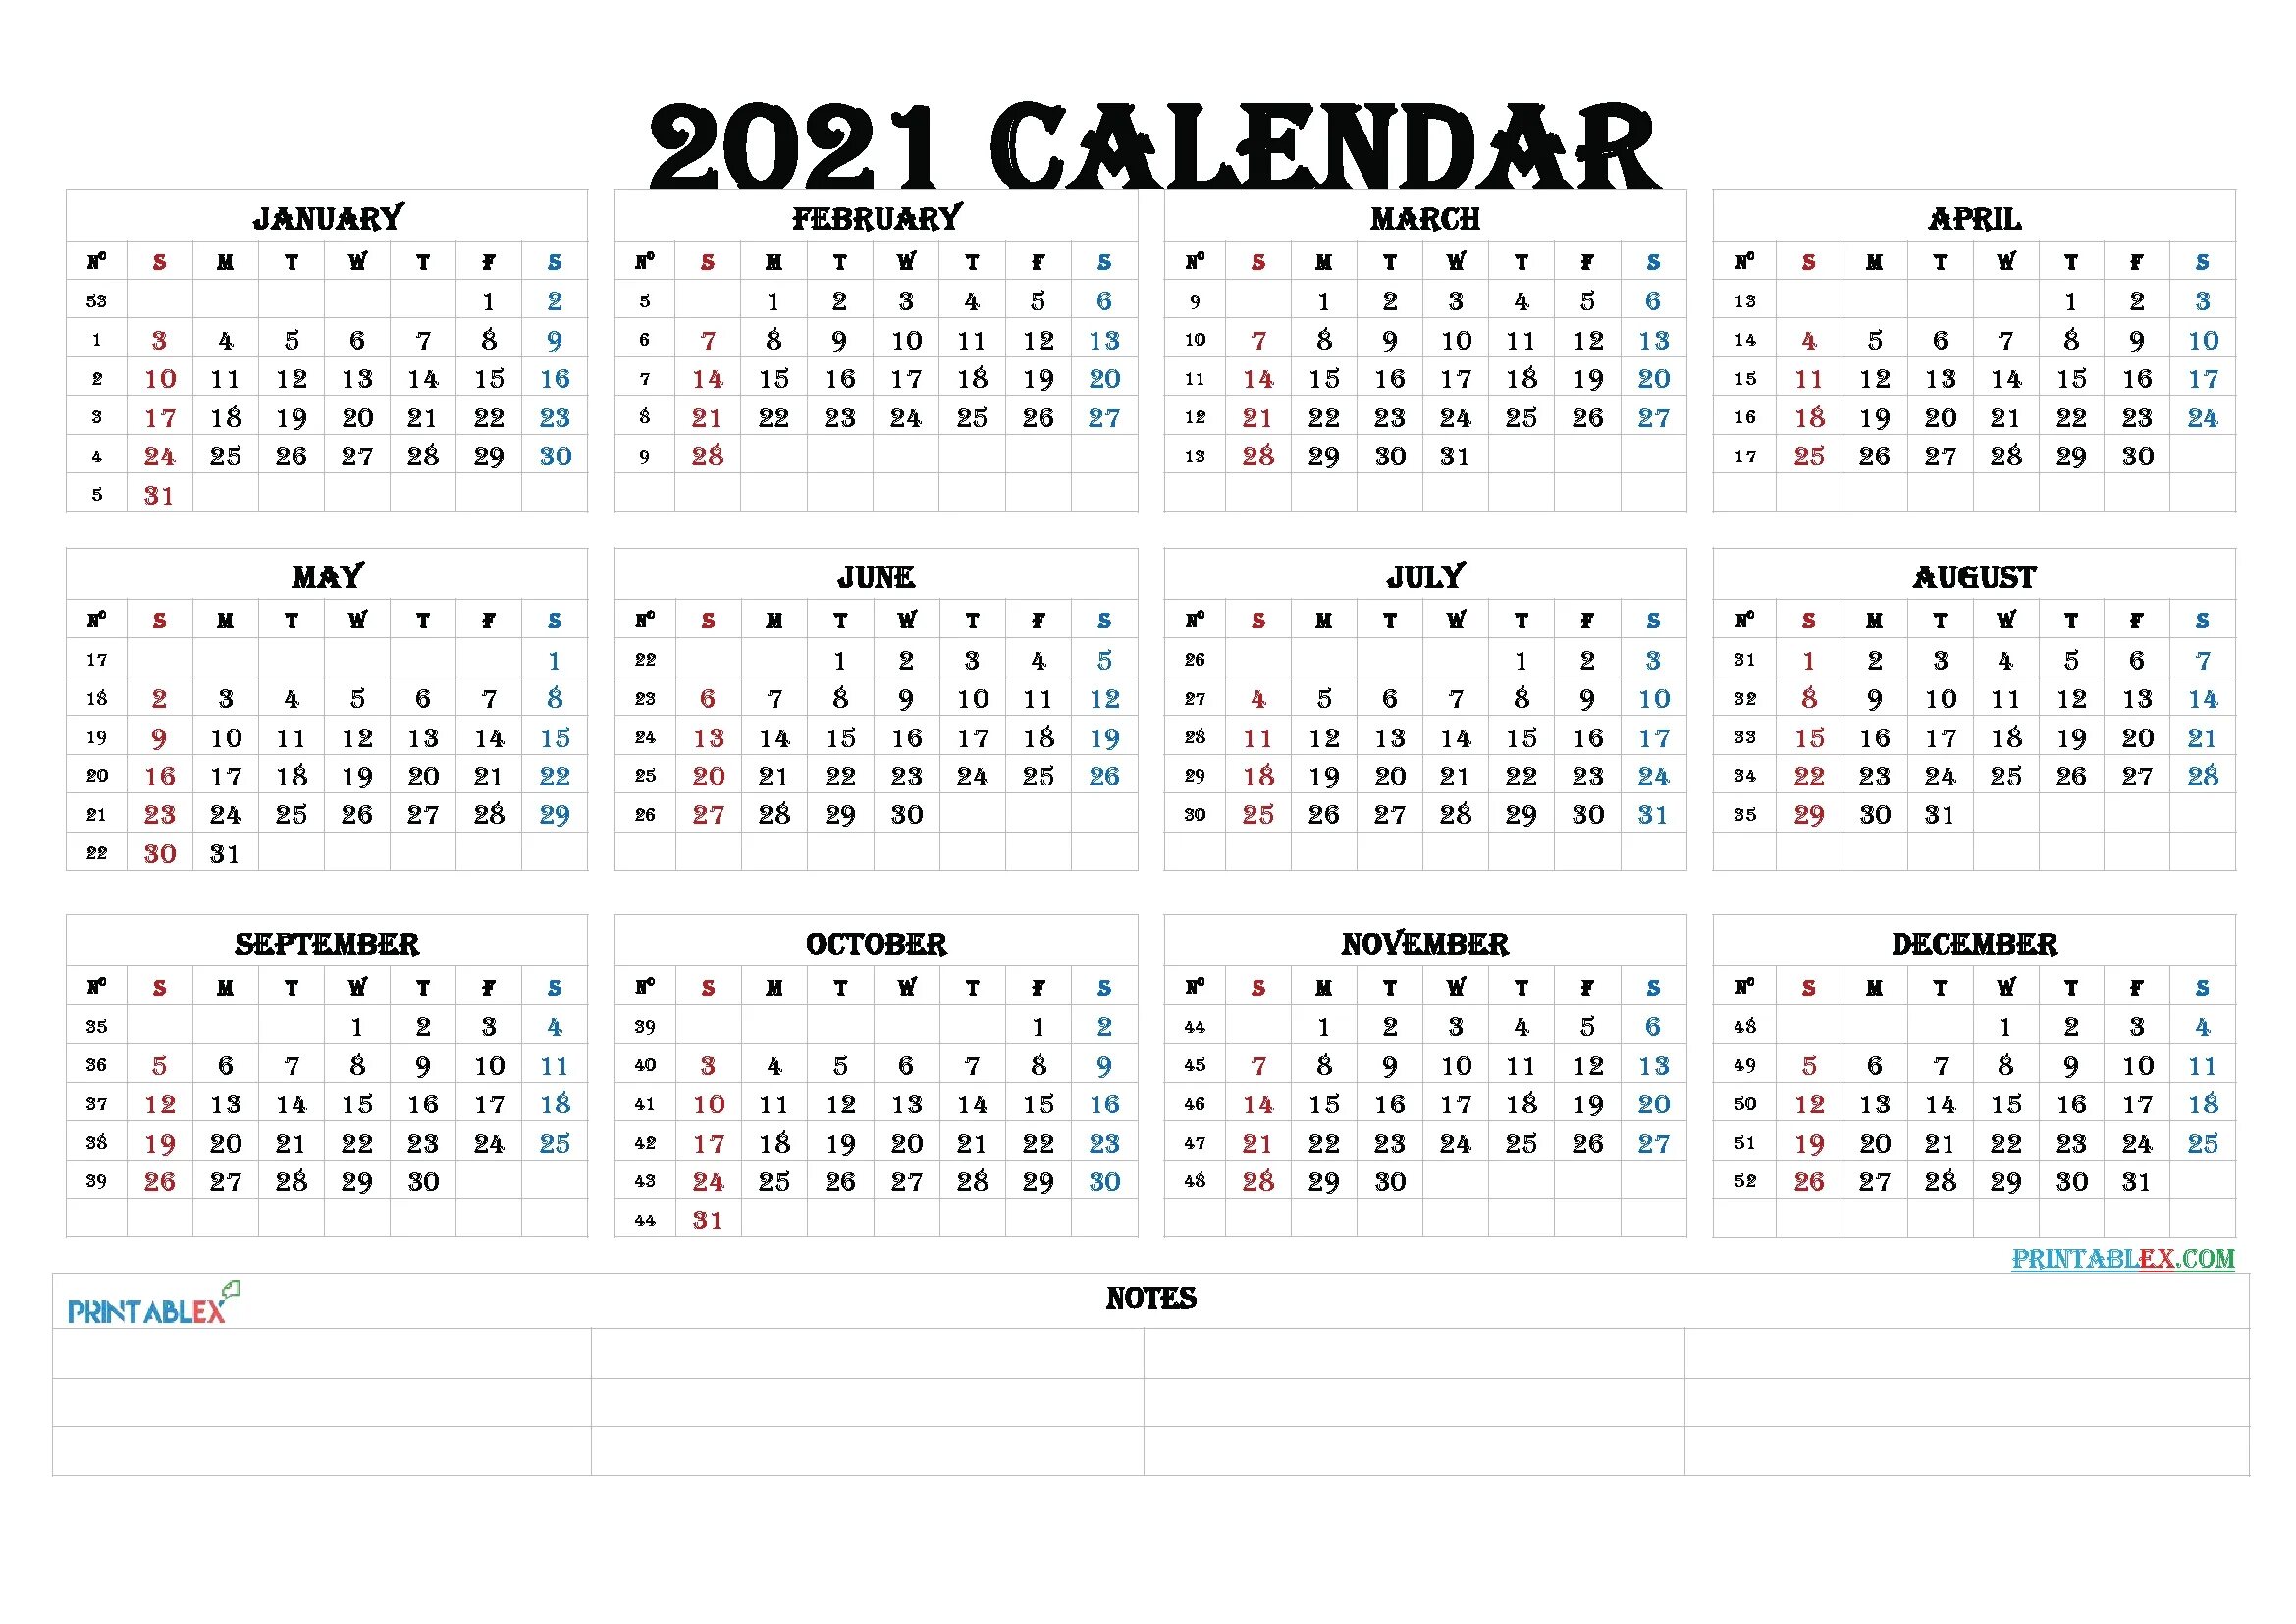 Календарь на неделю. Calendar week number. Calendar with weeks. Молдавский календарь. Календарь 2021 года какой год